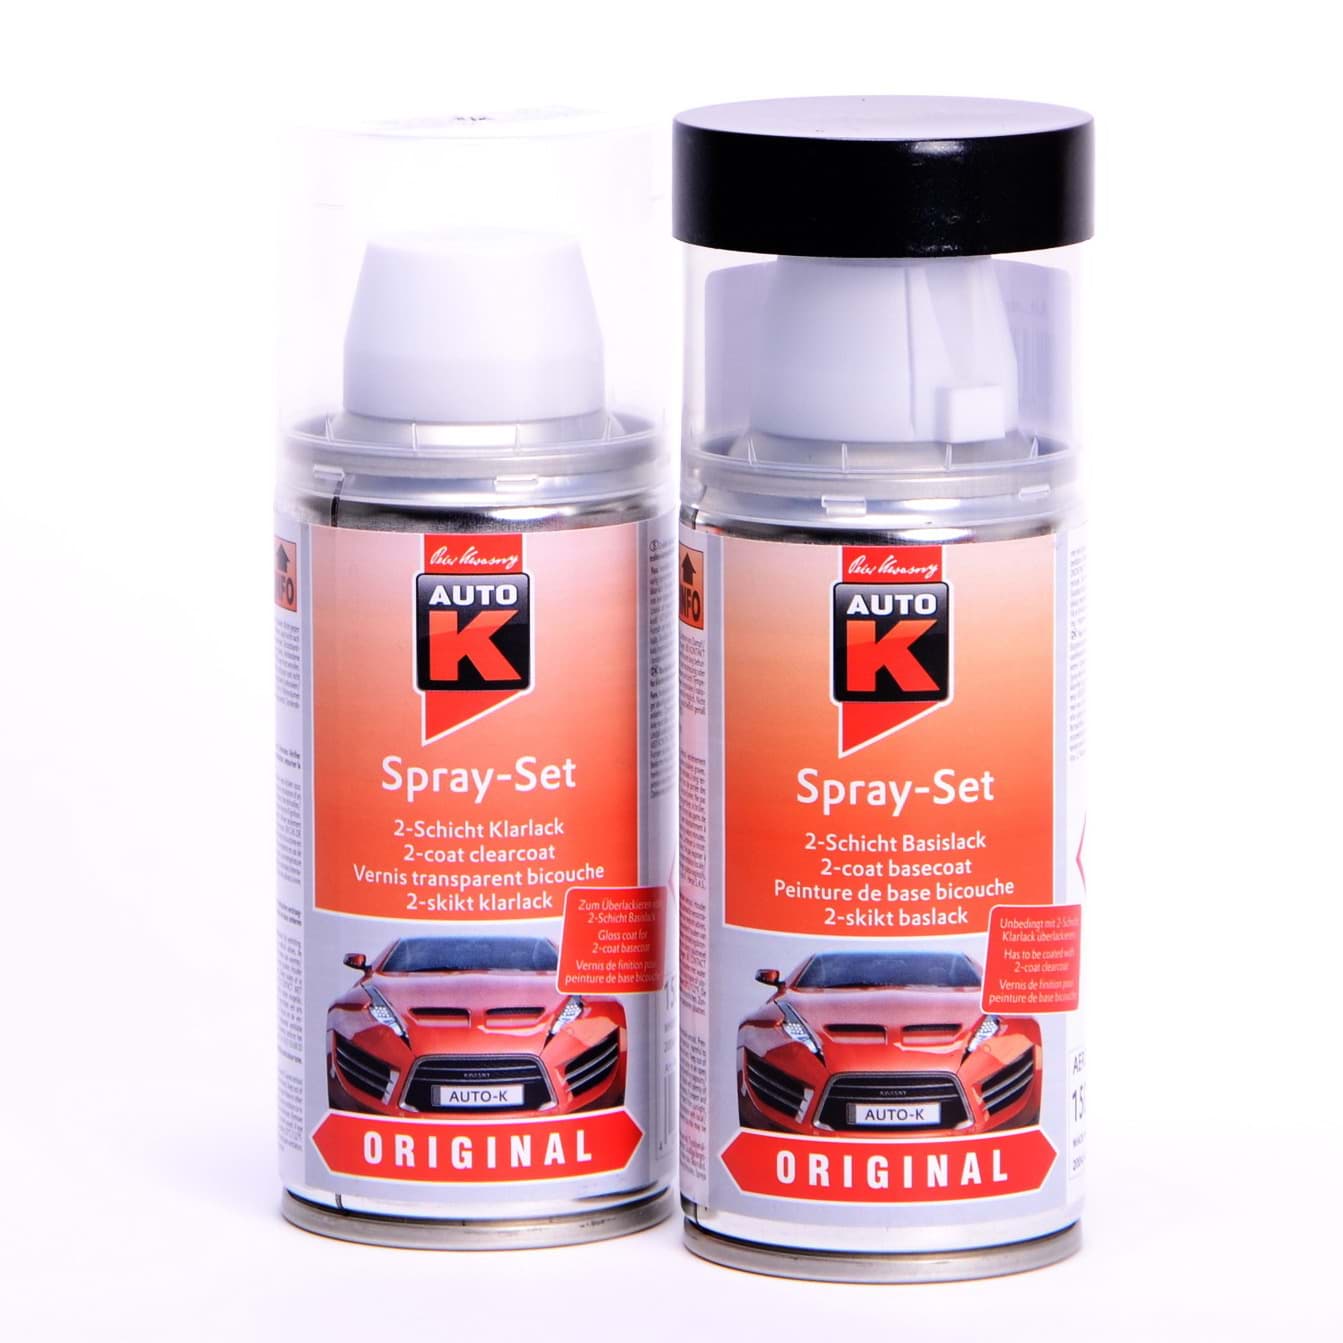 Auto-K Spray-Set Autolack für Opel 177 Karbongrau met 21478 resmi